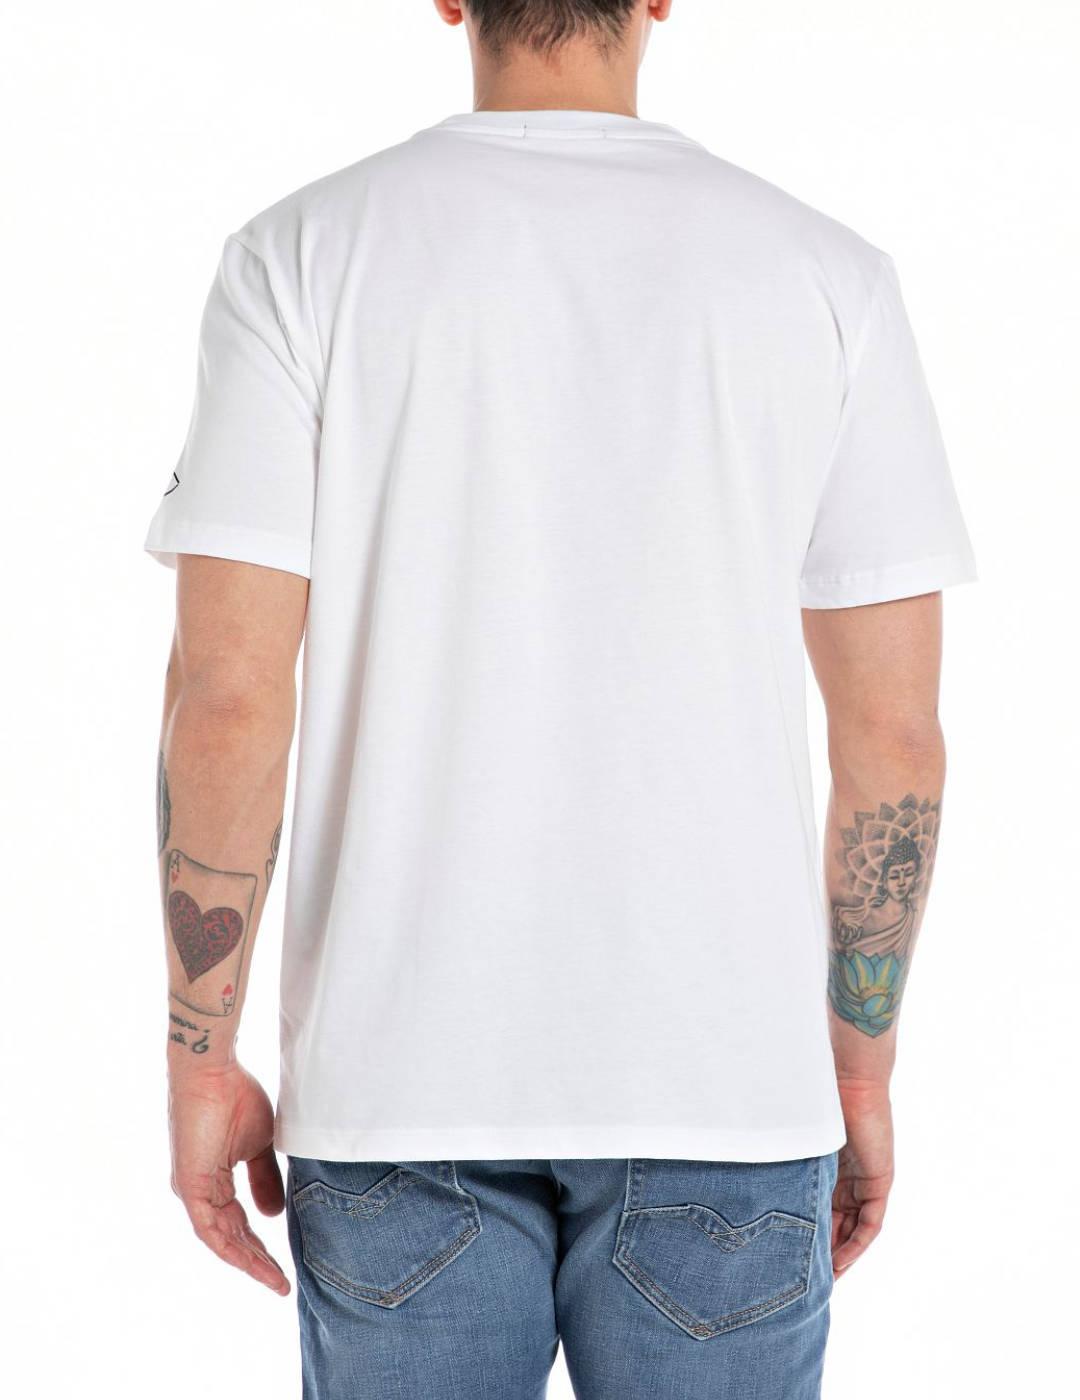 Camiseta Replay blanca básica de manga corta para hombre